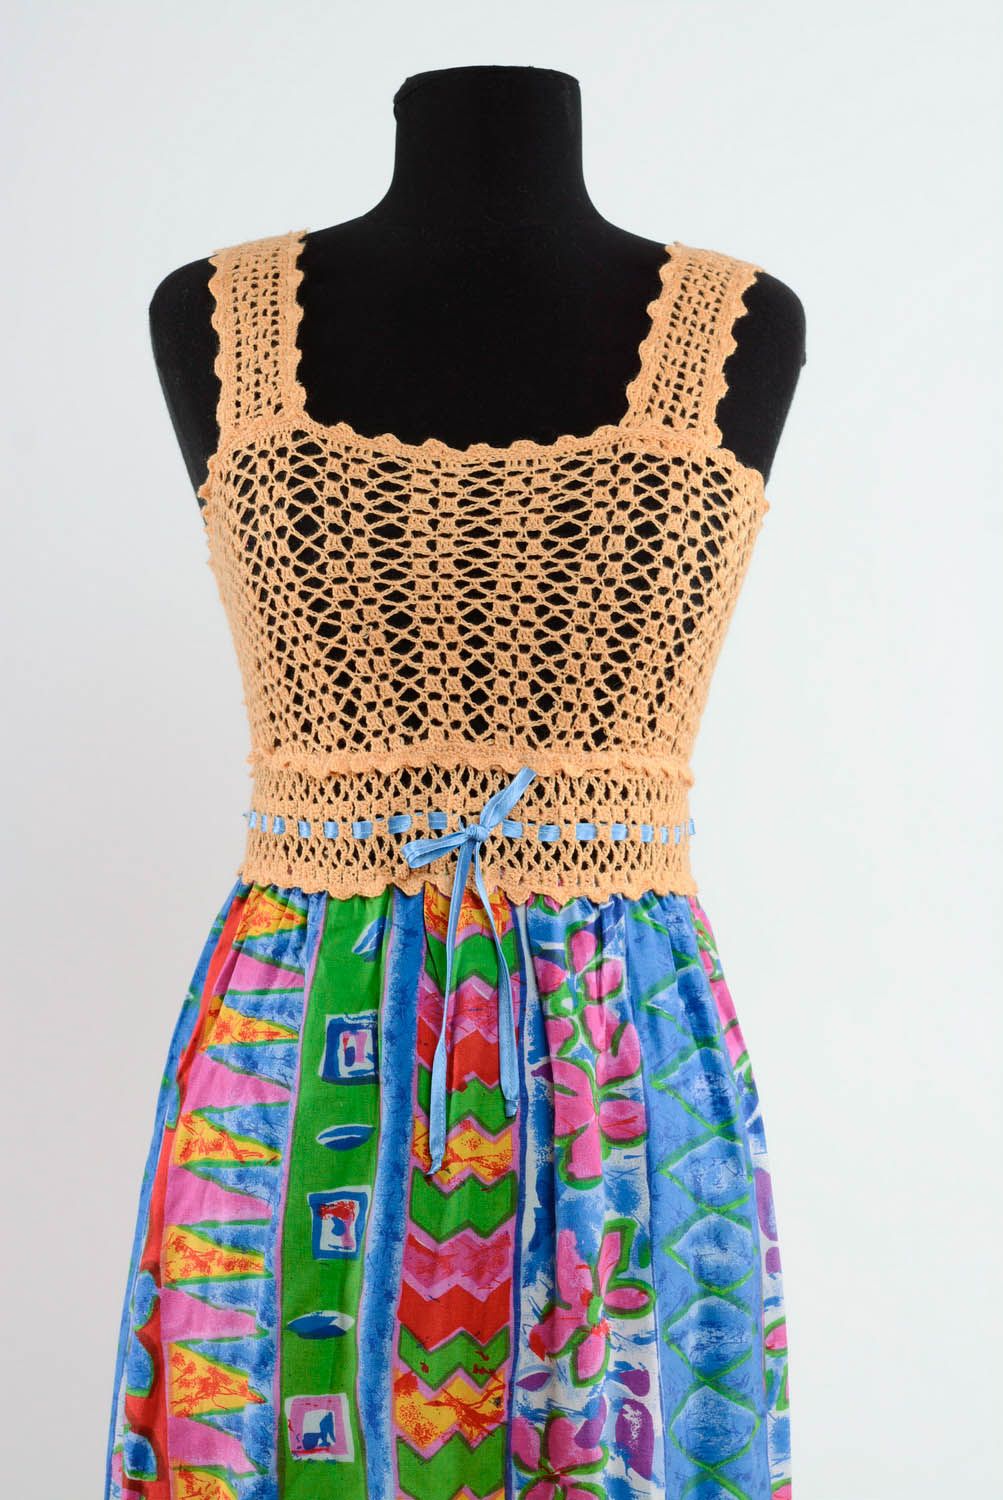 Crocheted dress photo 2